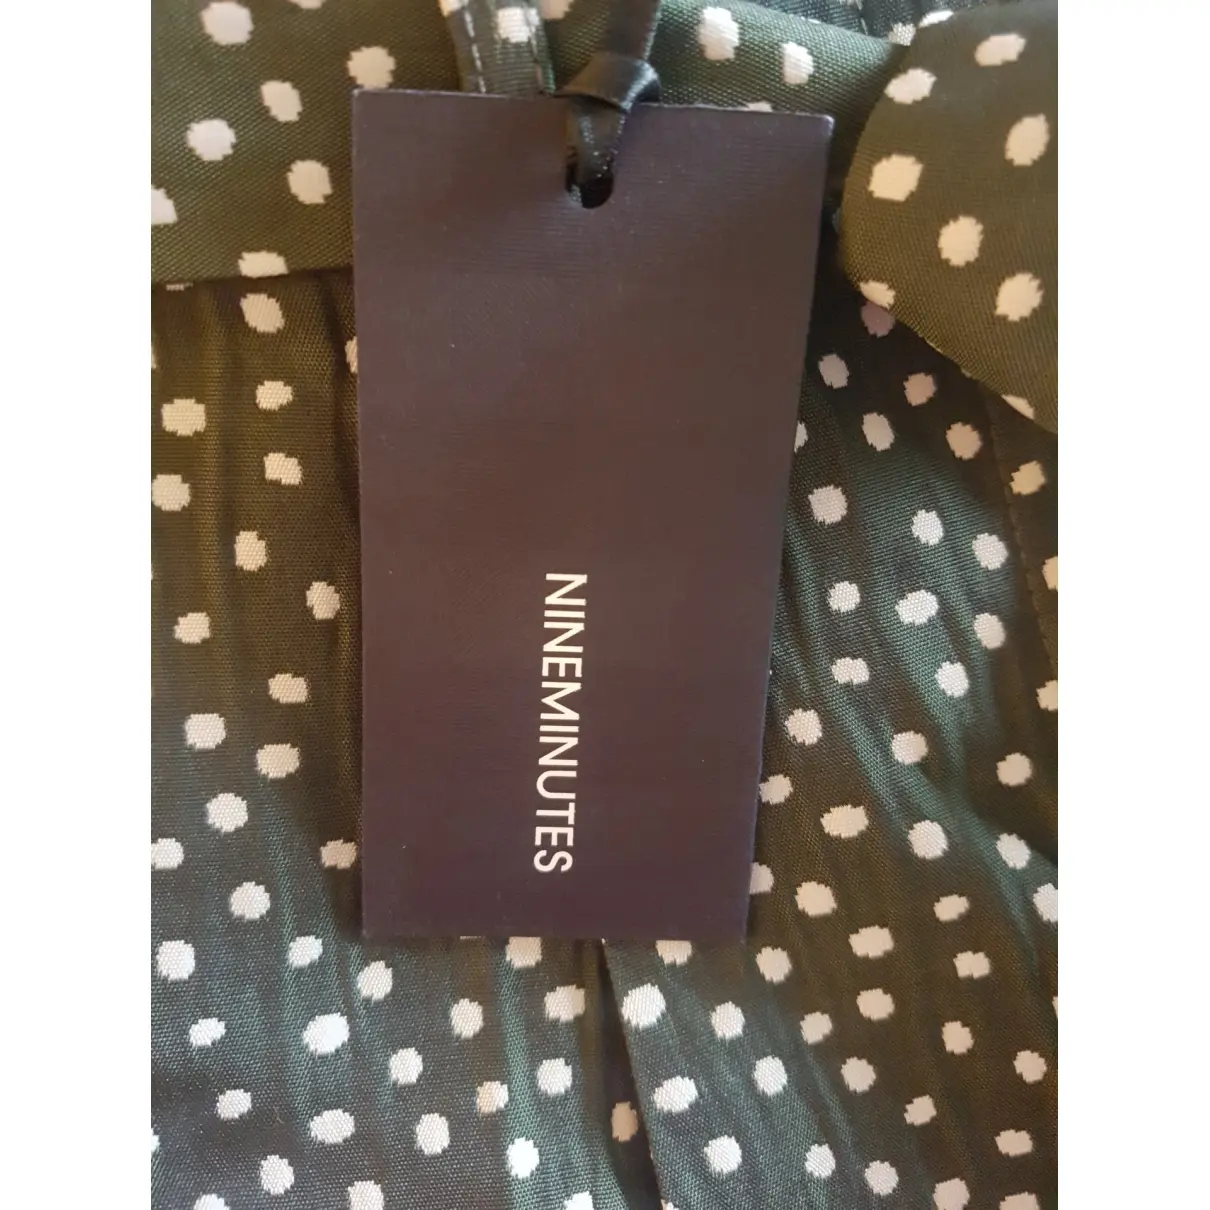 Buy Nineminutes Trousers online